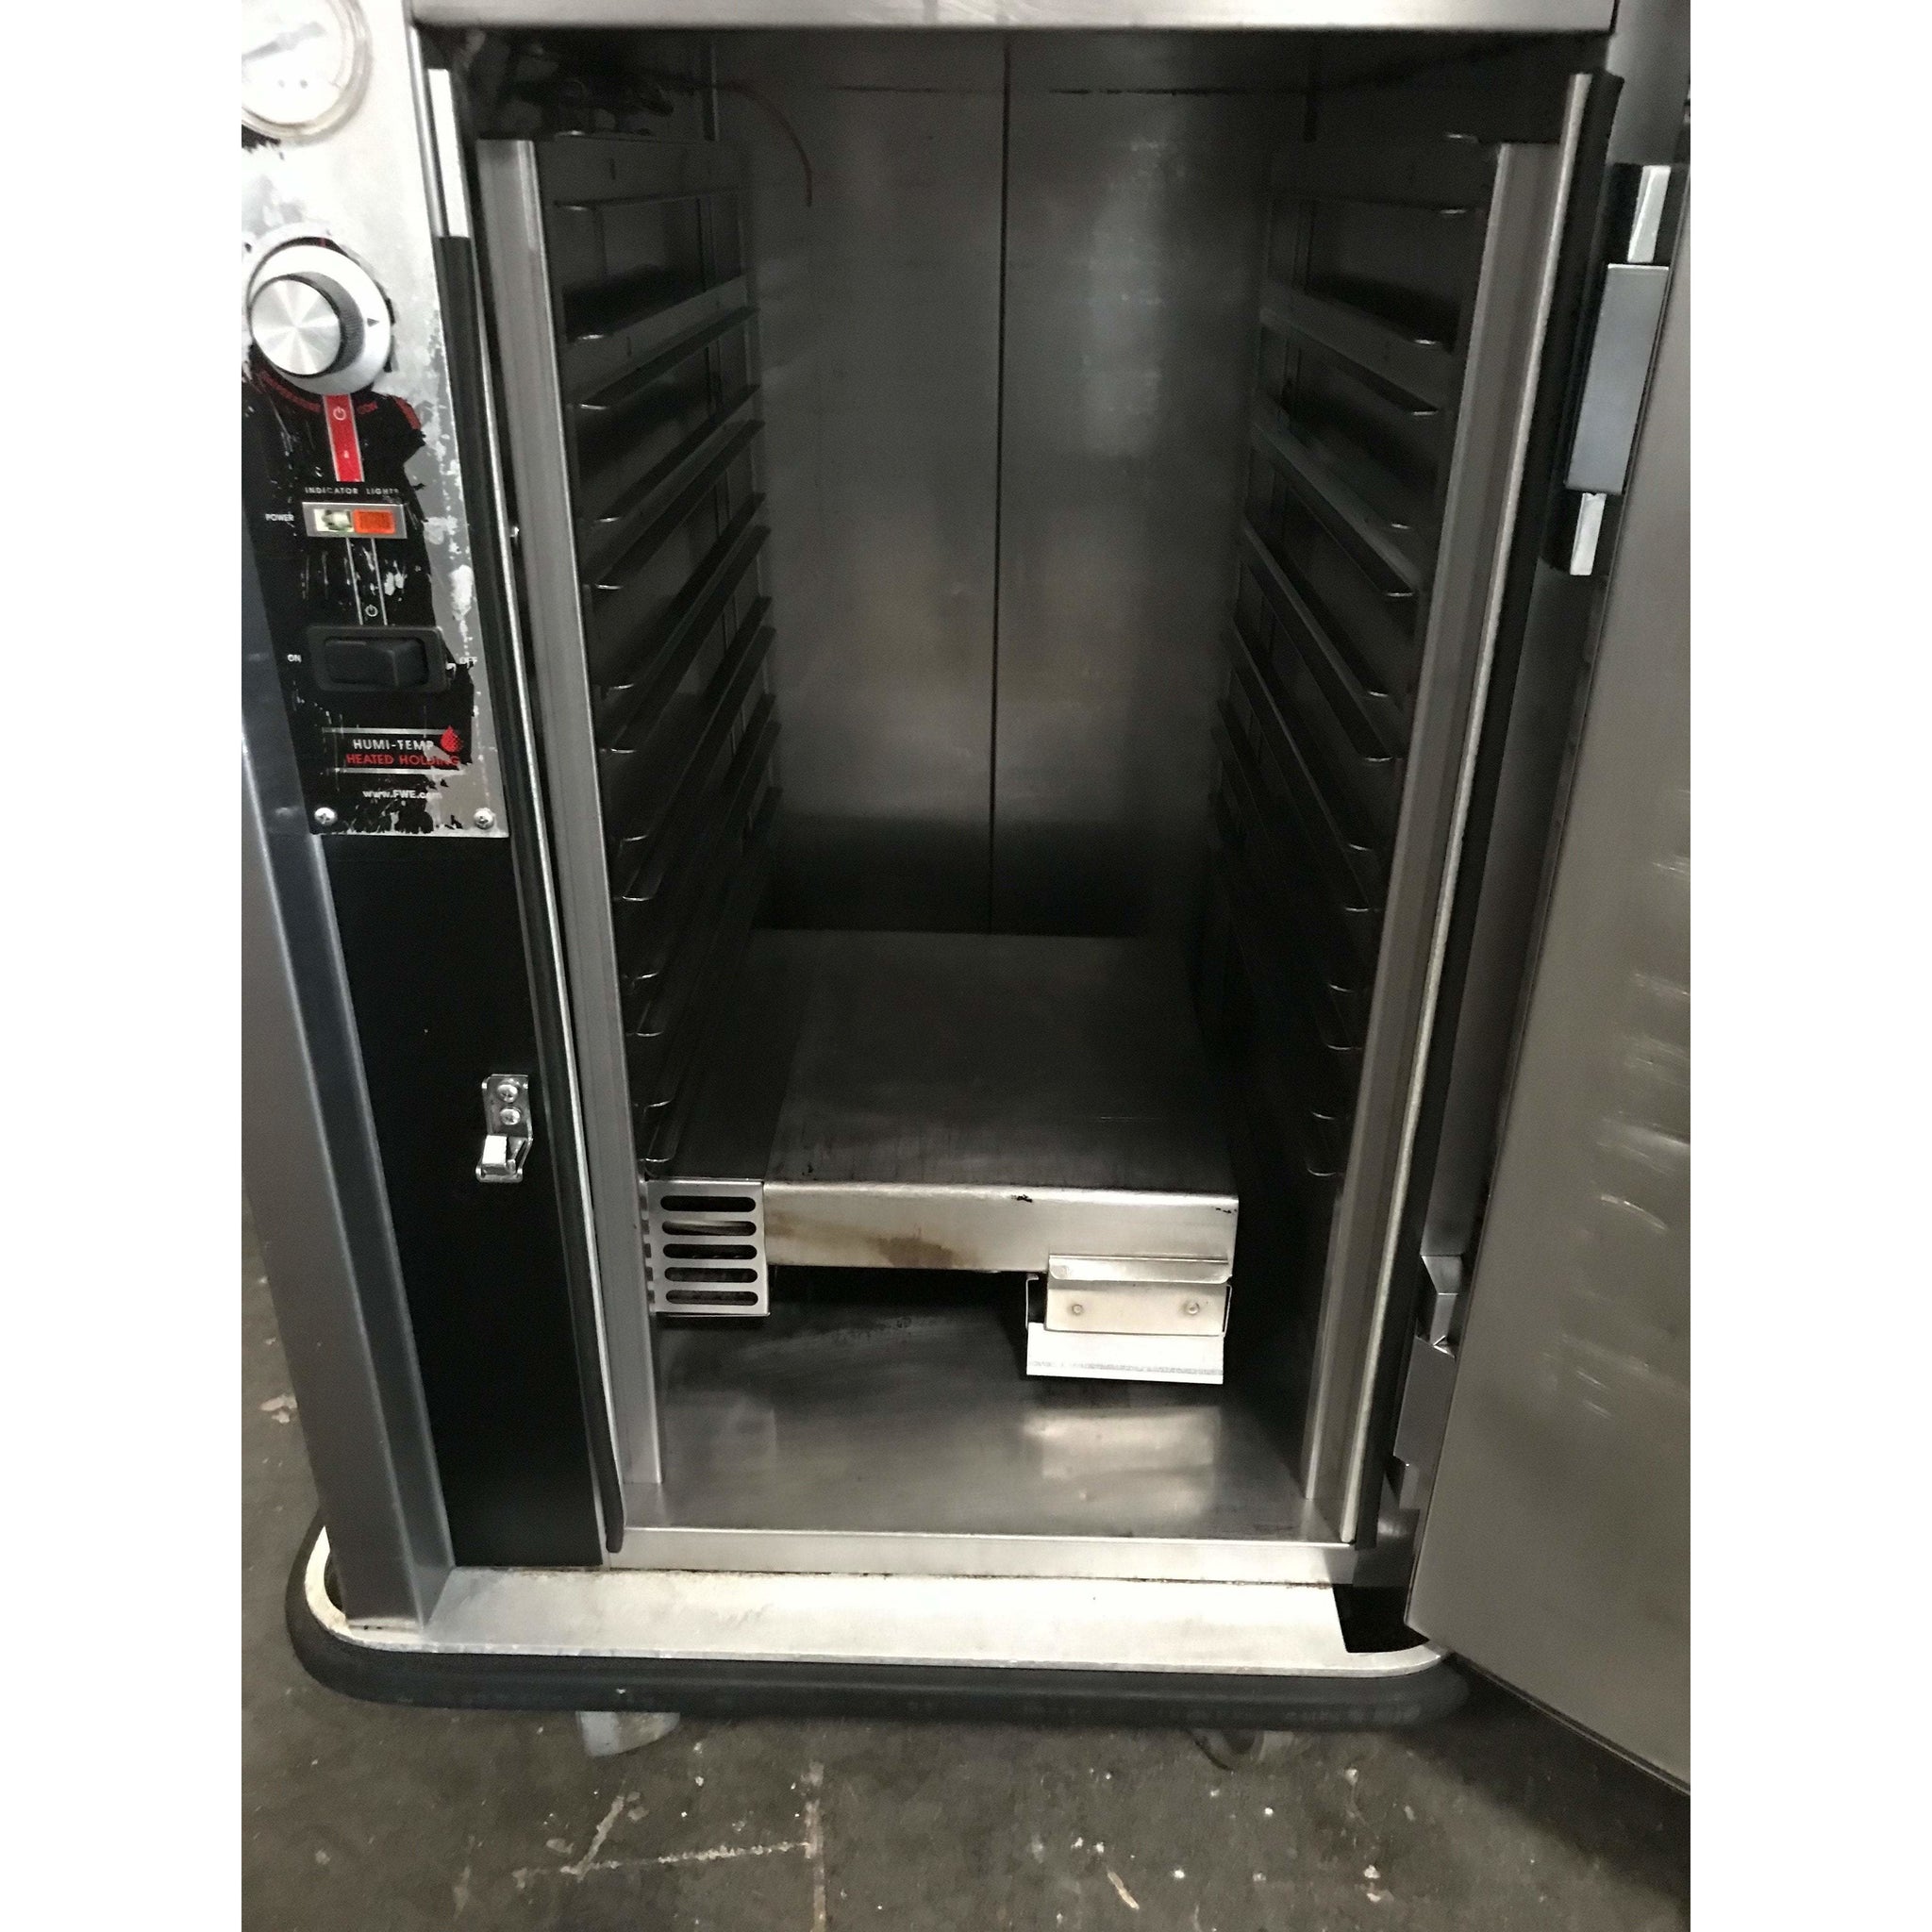 Food Warmer Cabinet (Electric)